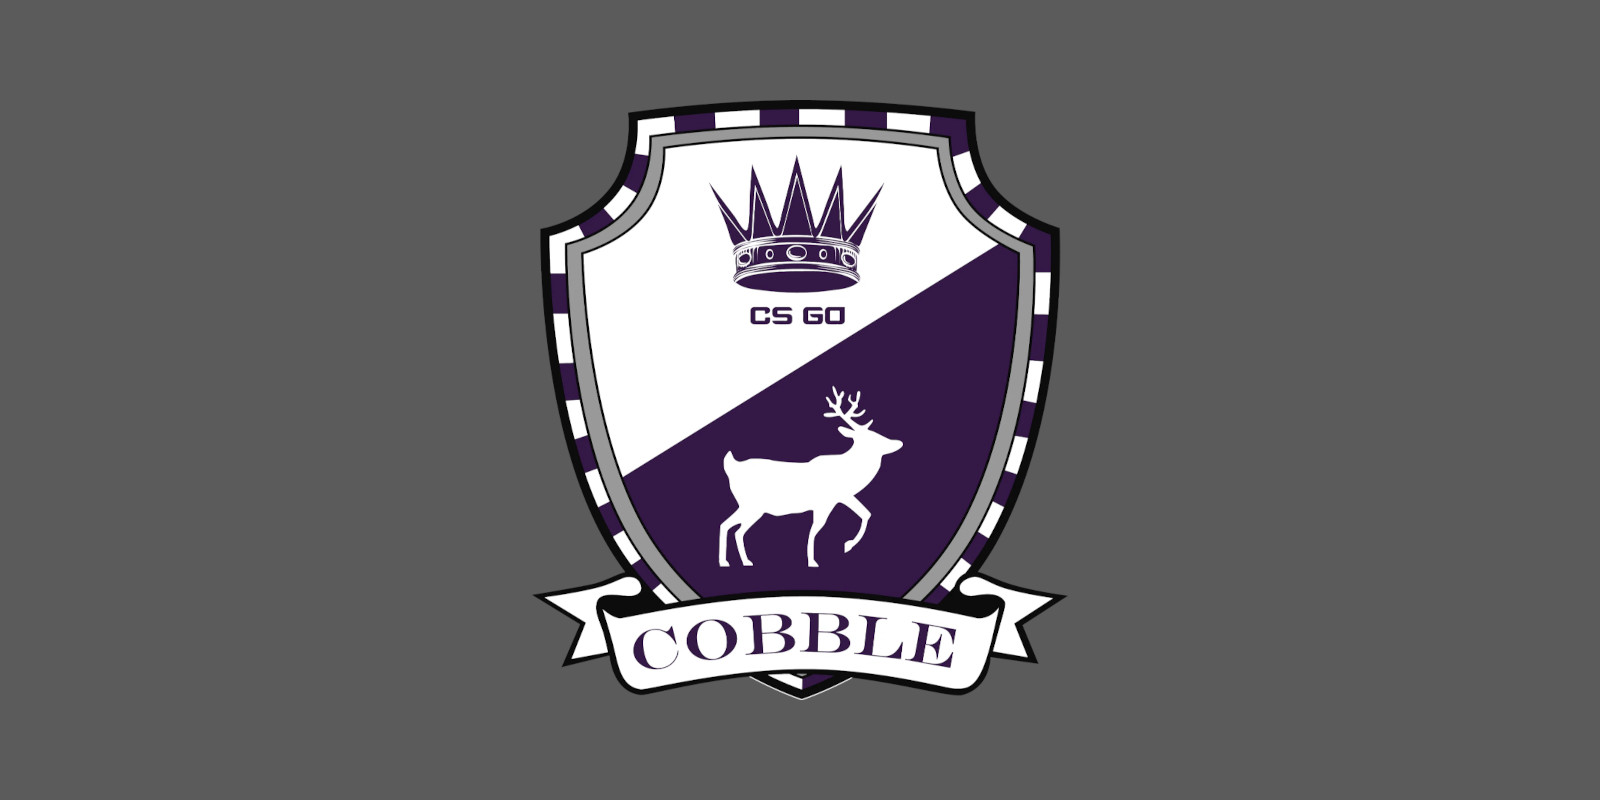 CS:GO - Series 2 - Cobblestone Collectible Pin